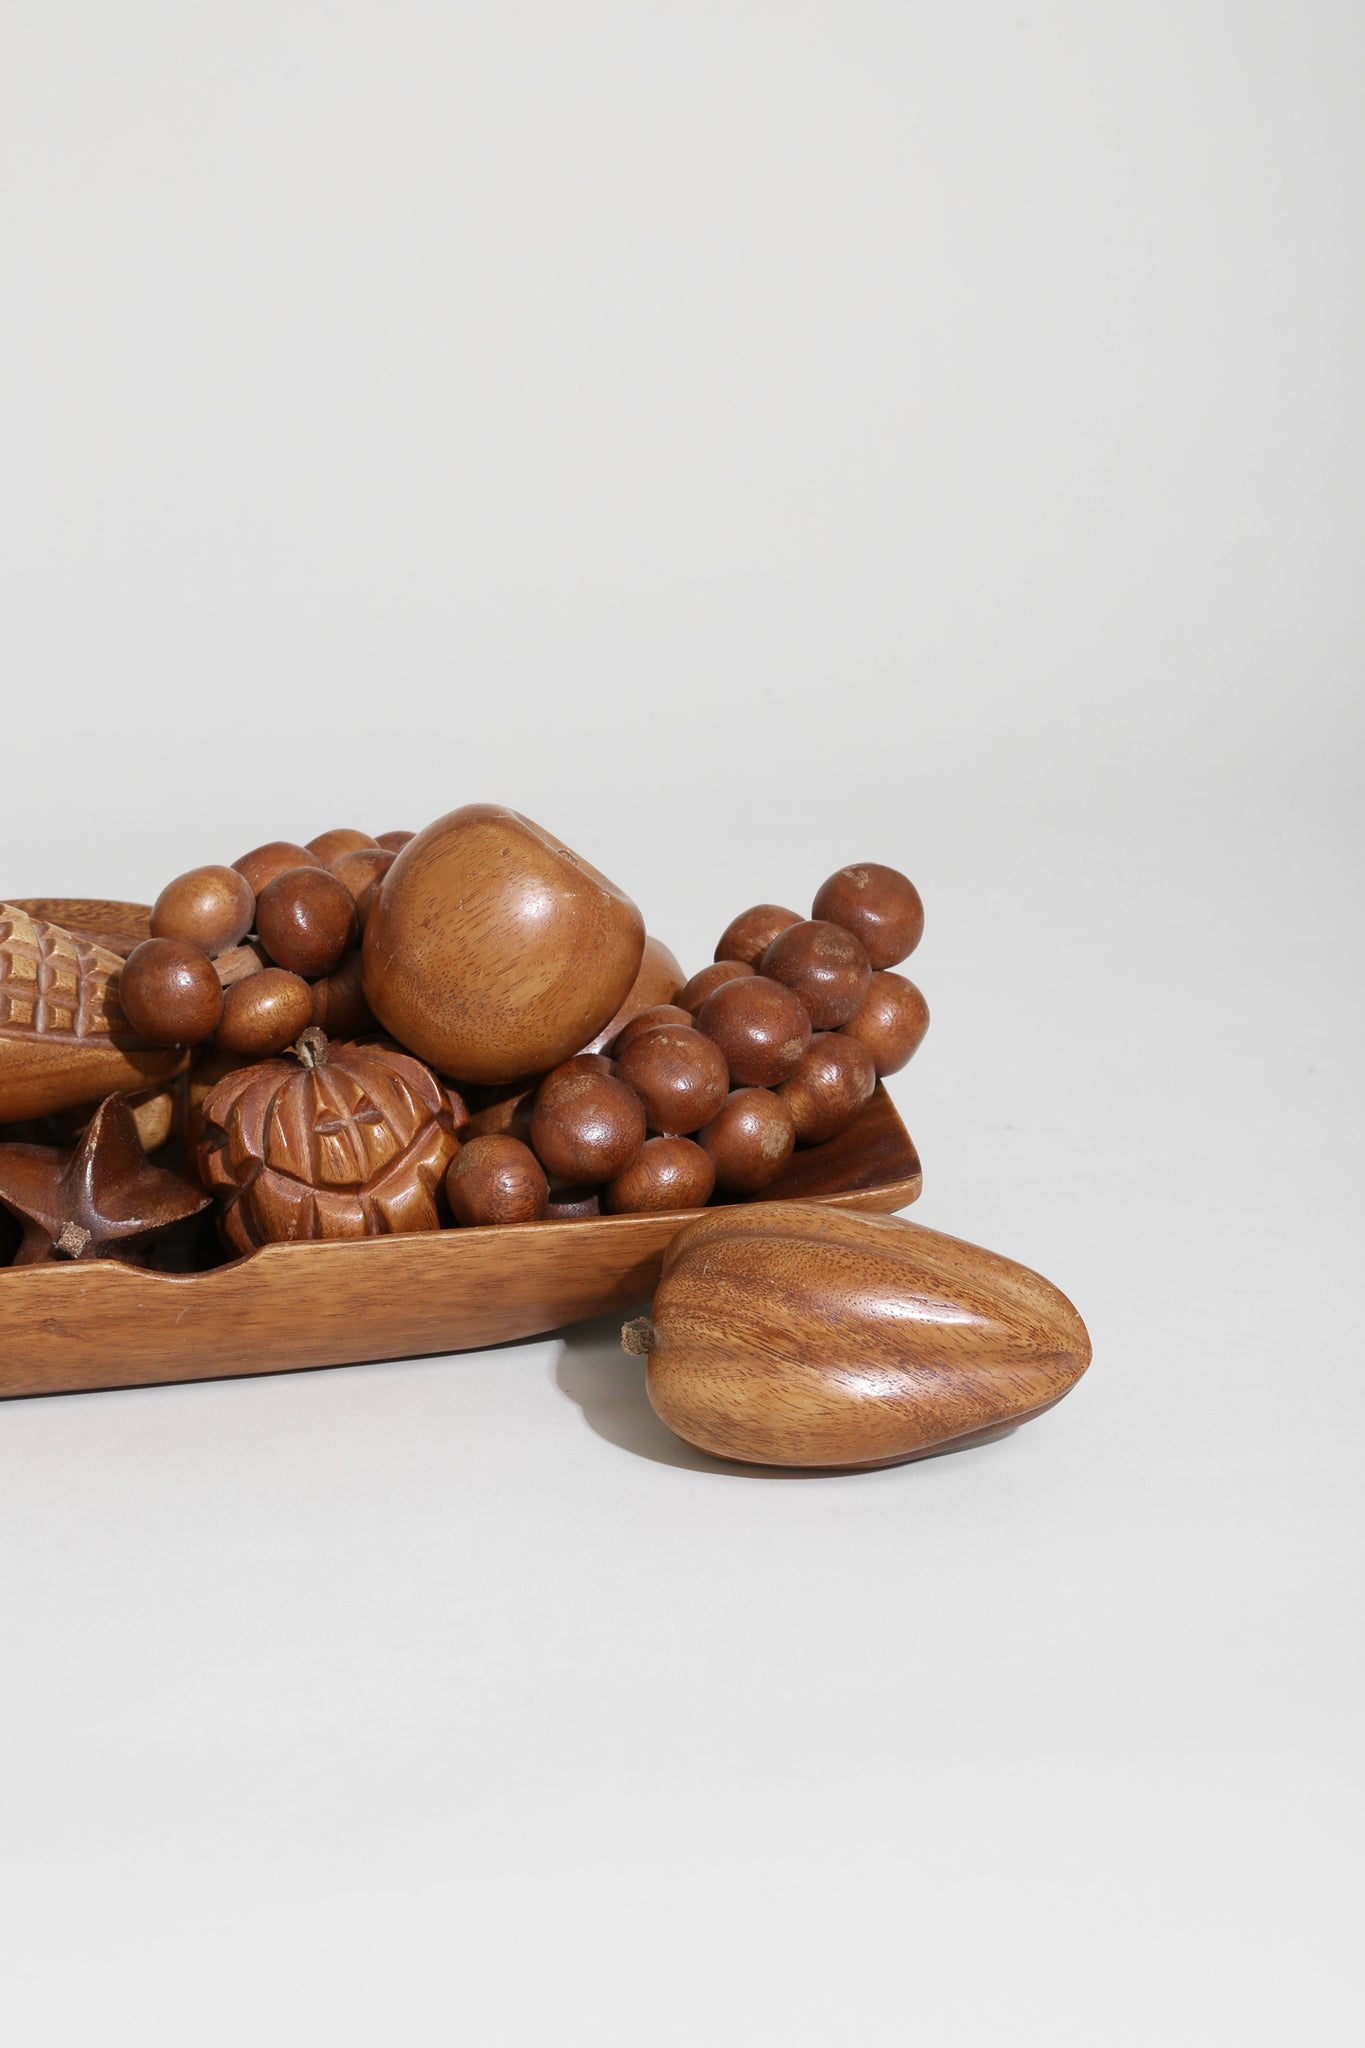 Carved Wooden Fruits + Bowl